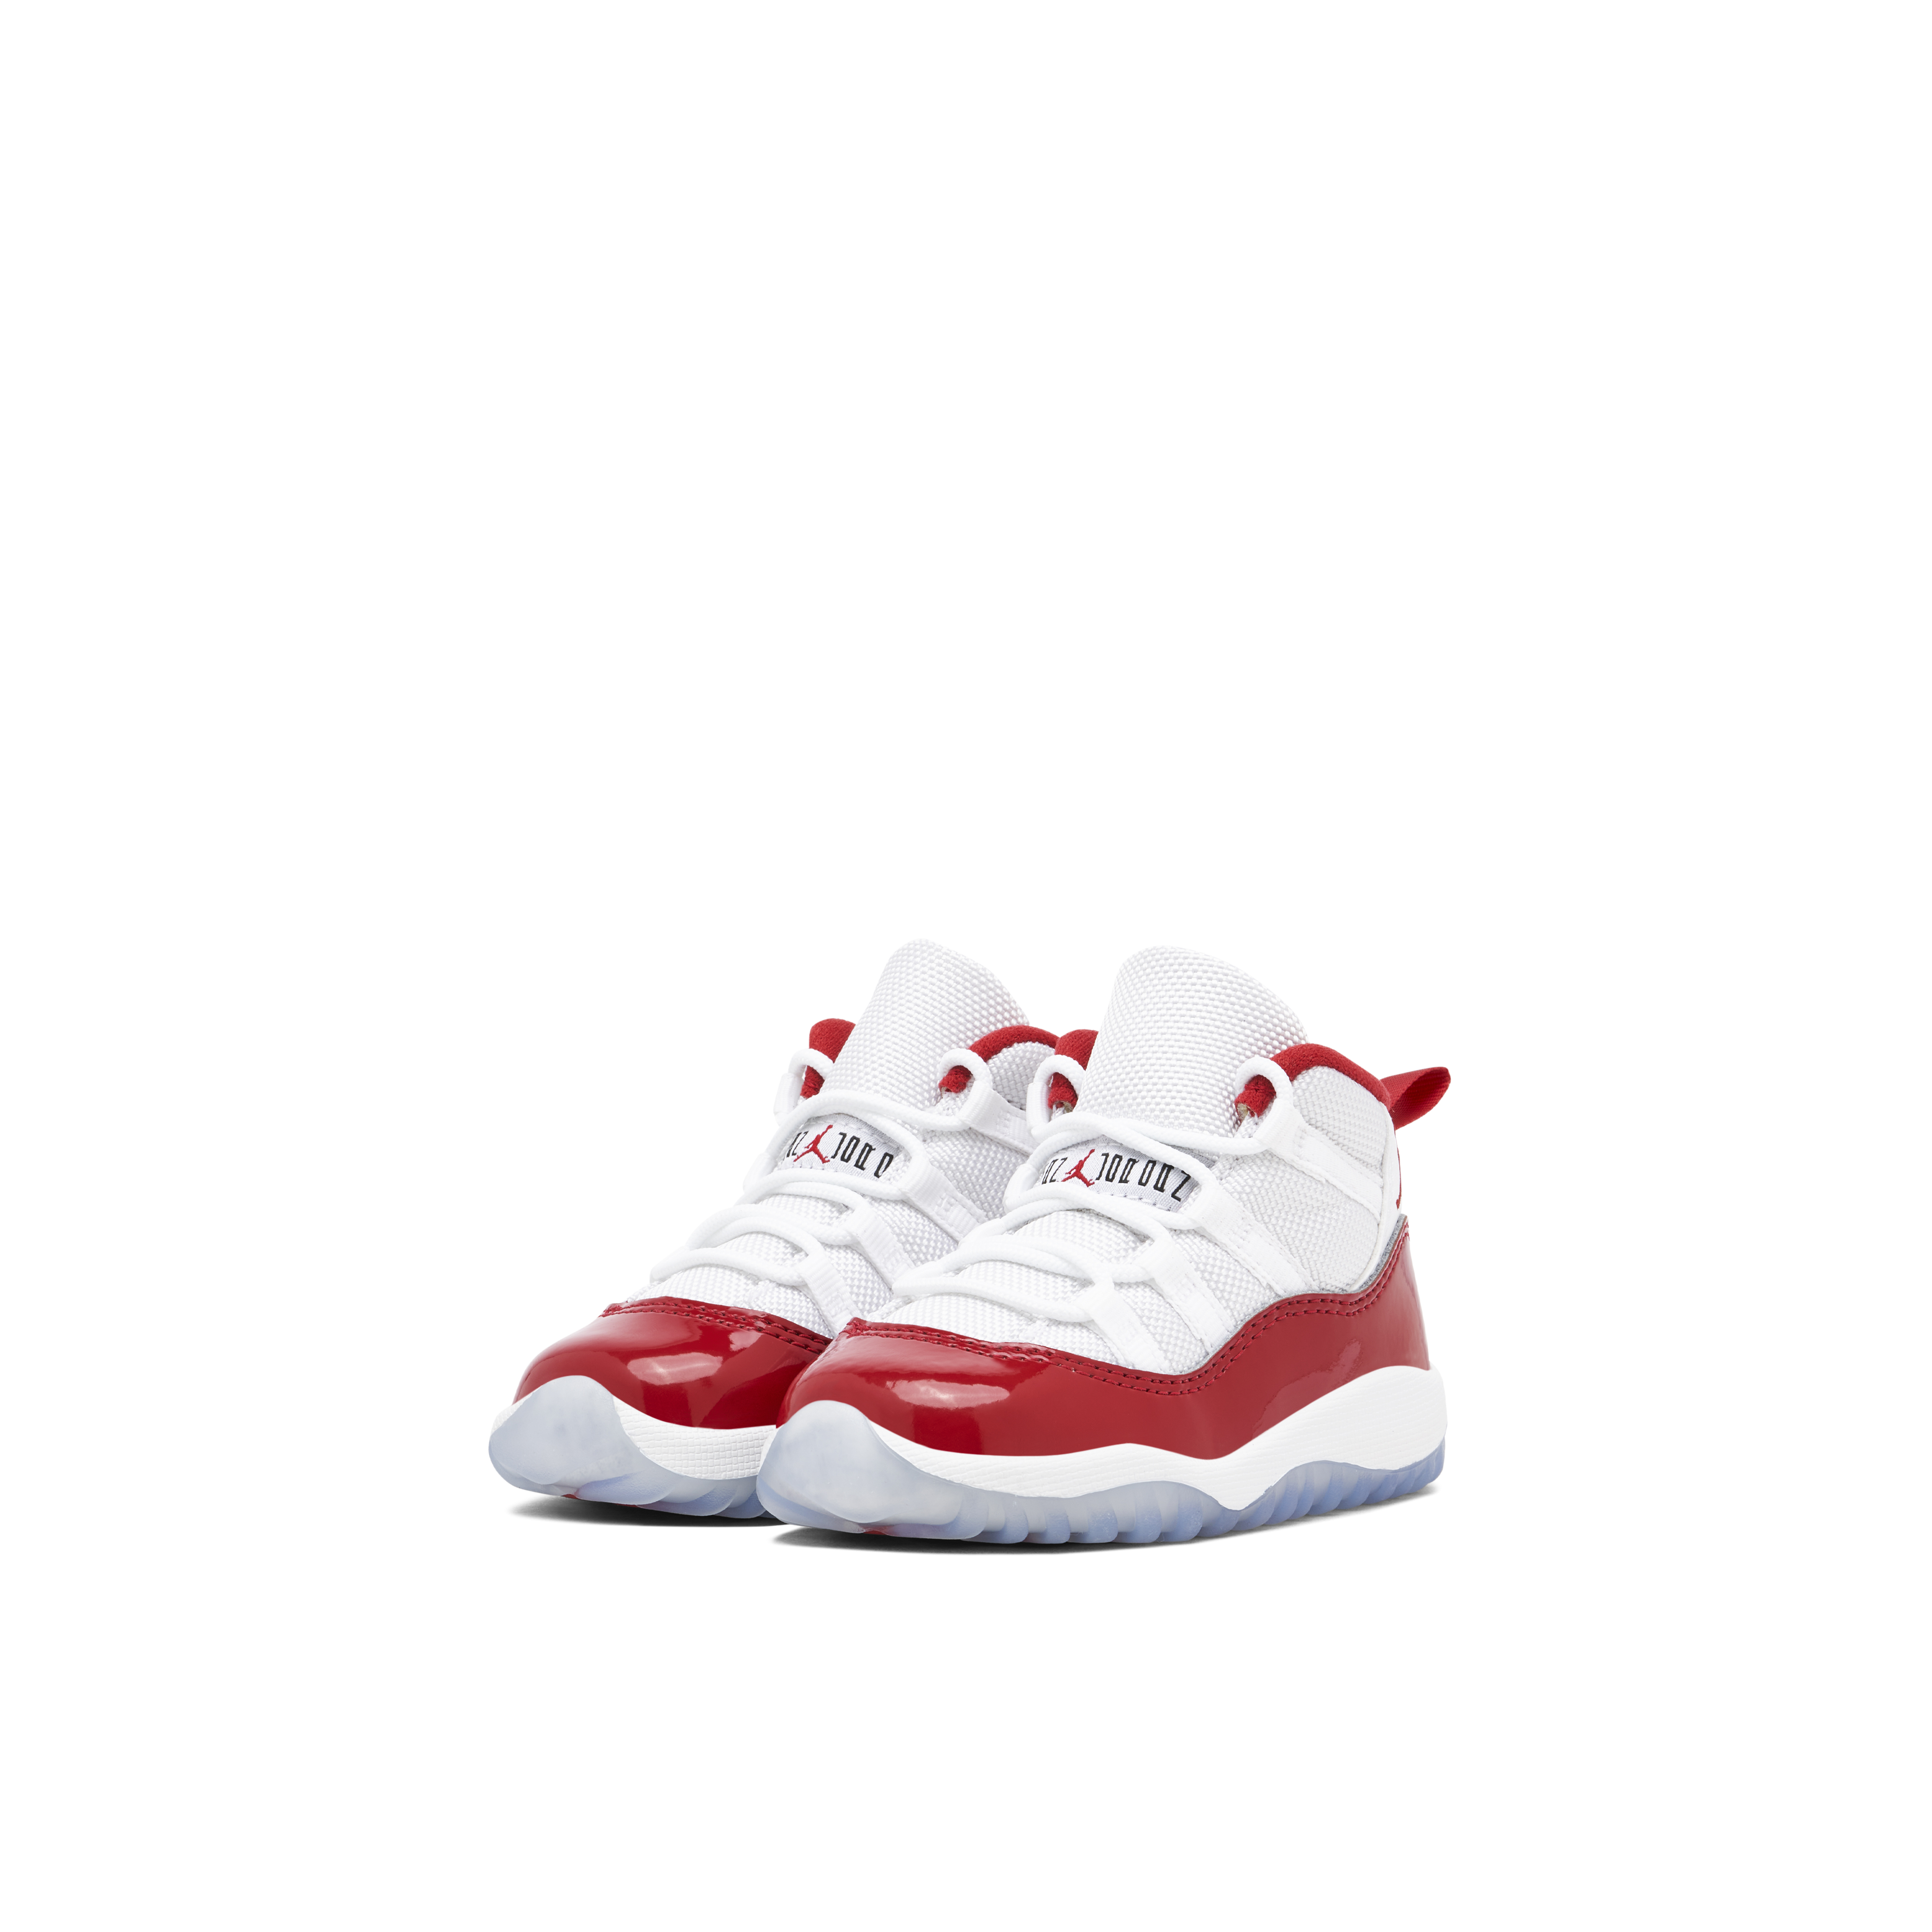 Air Jordan 11 Cherry TD | 378040-116 | Laced